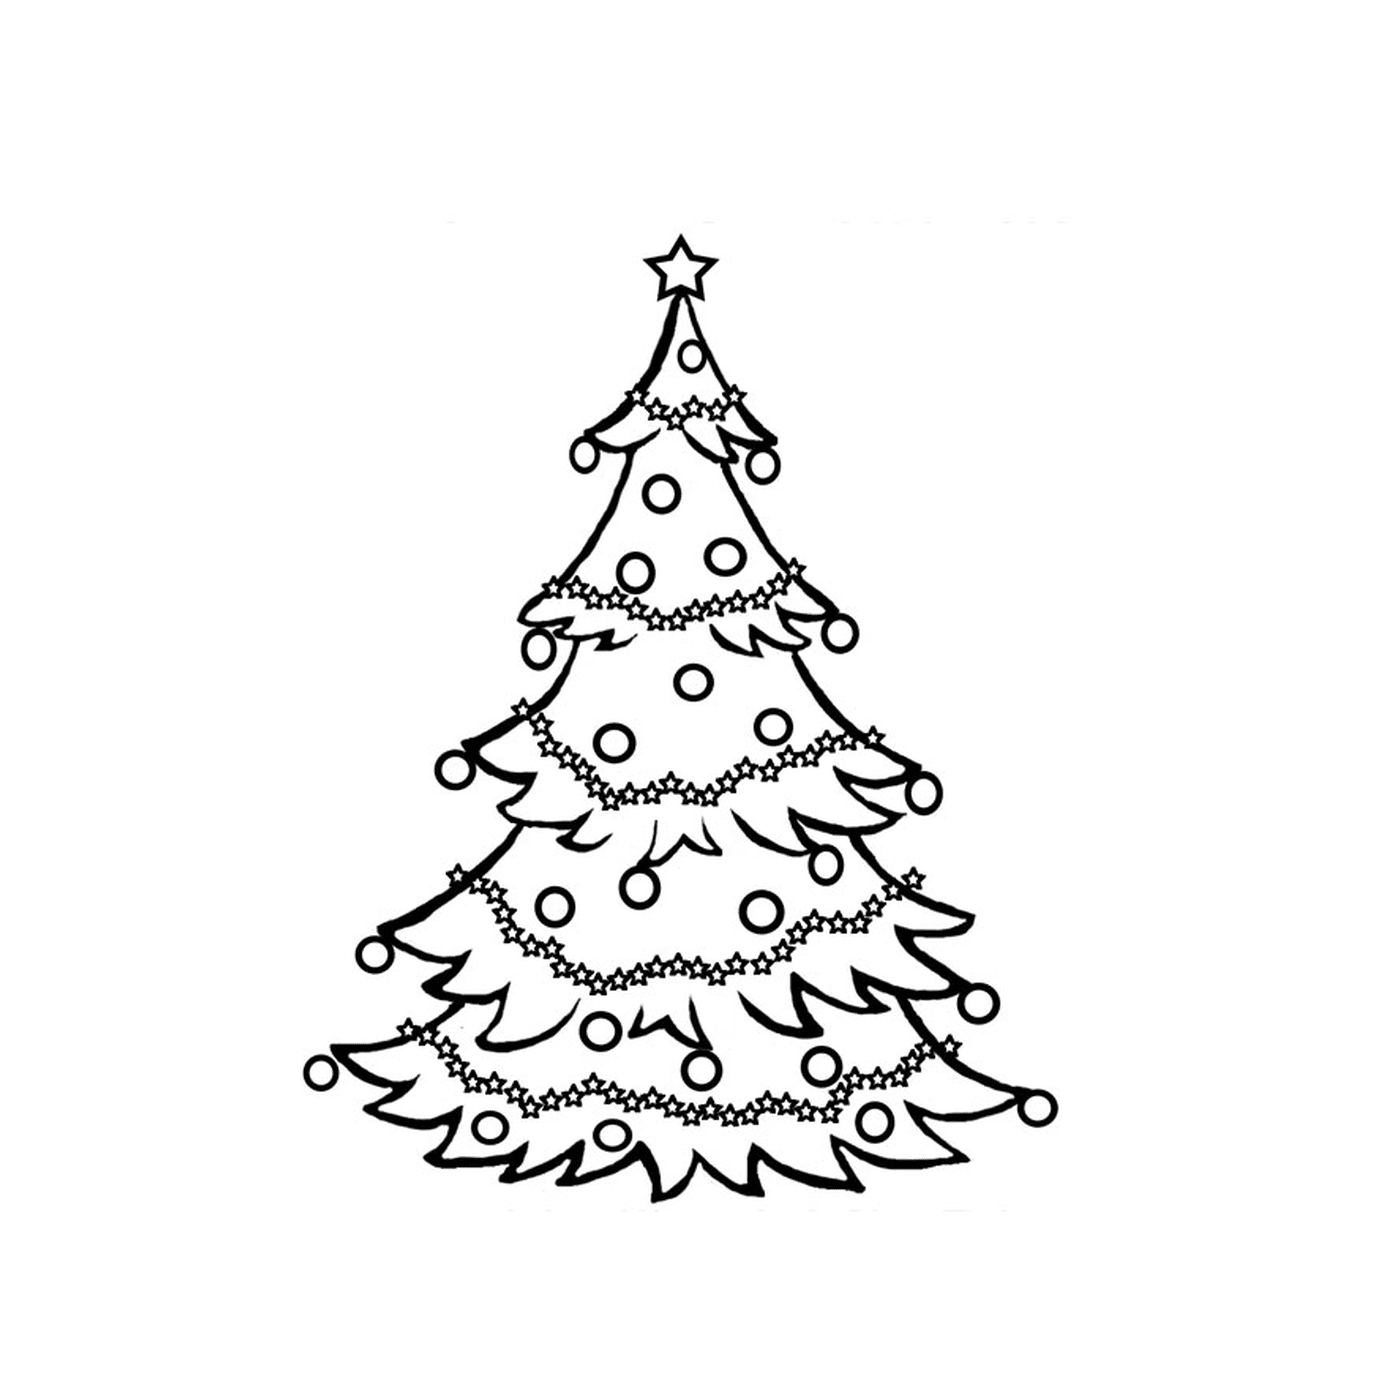  Christmas tree festive 